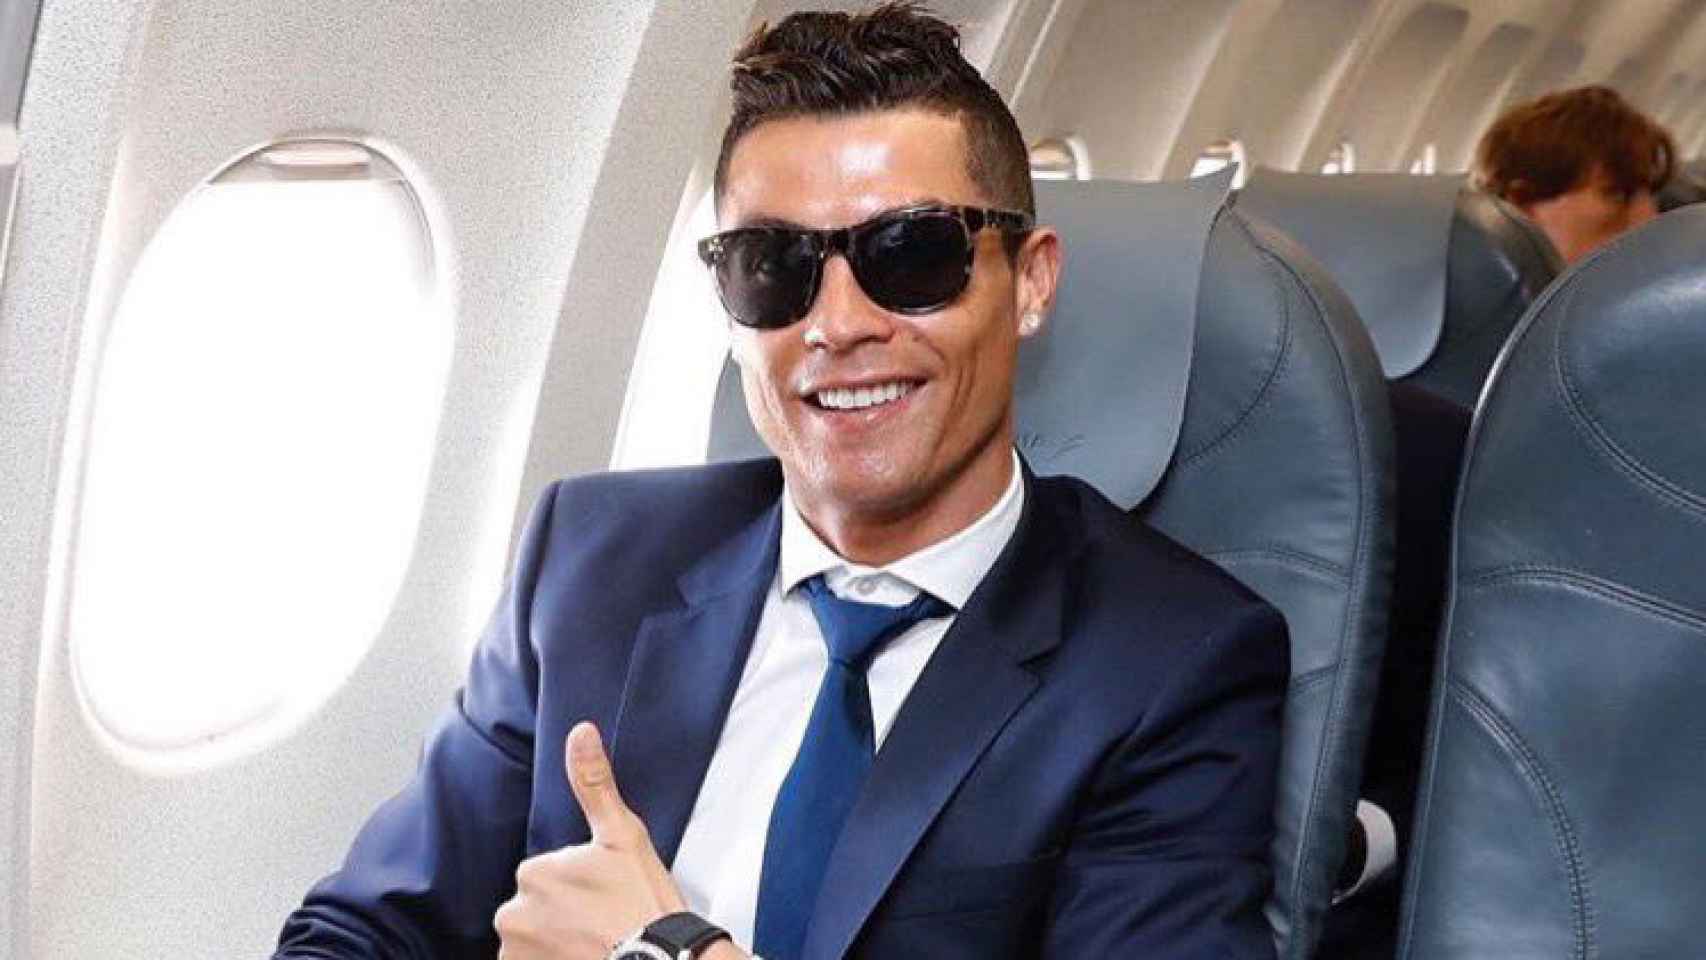 Cristiano Ronaldo en el avión a Múnich. Foto: Twitter (@Cristiano)